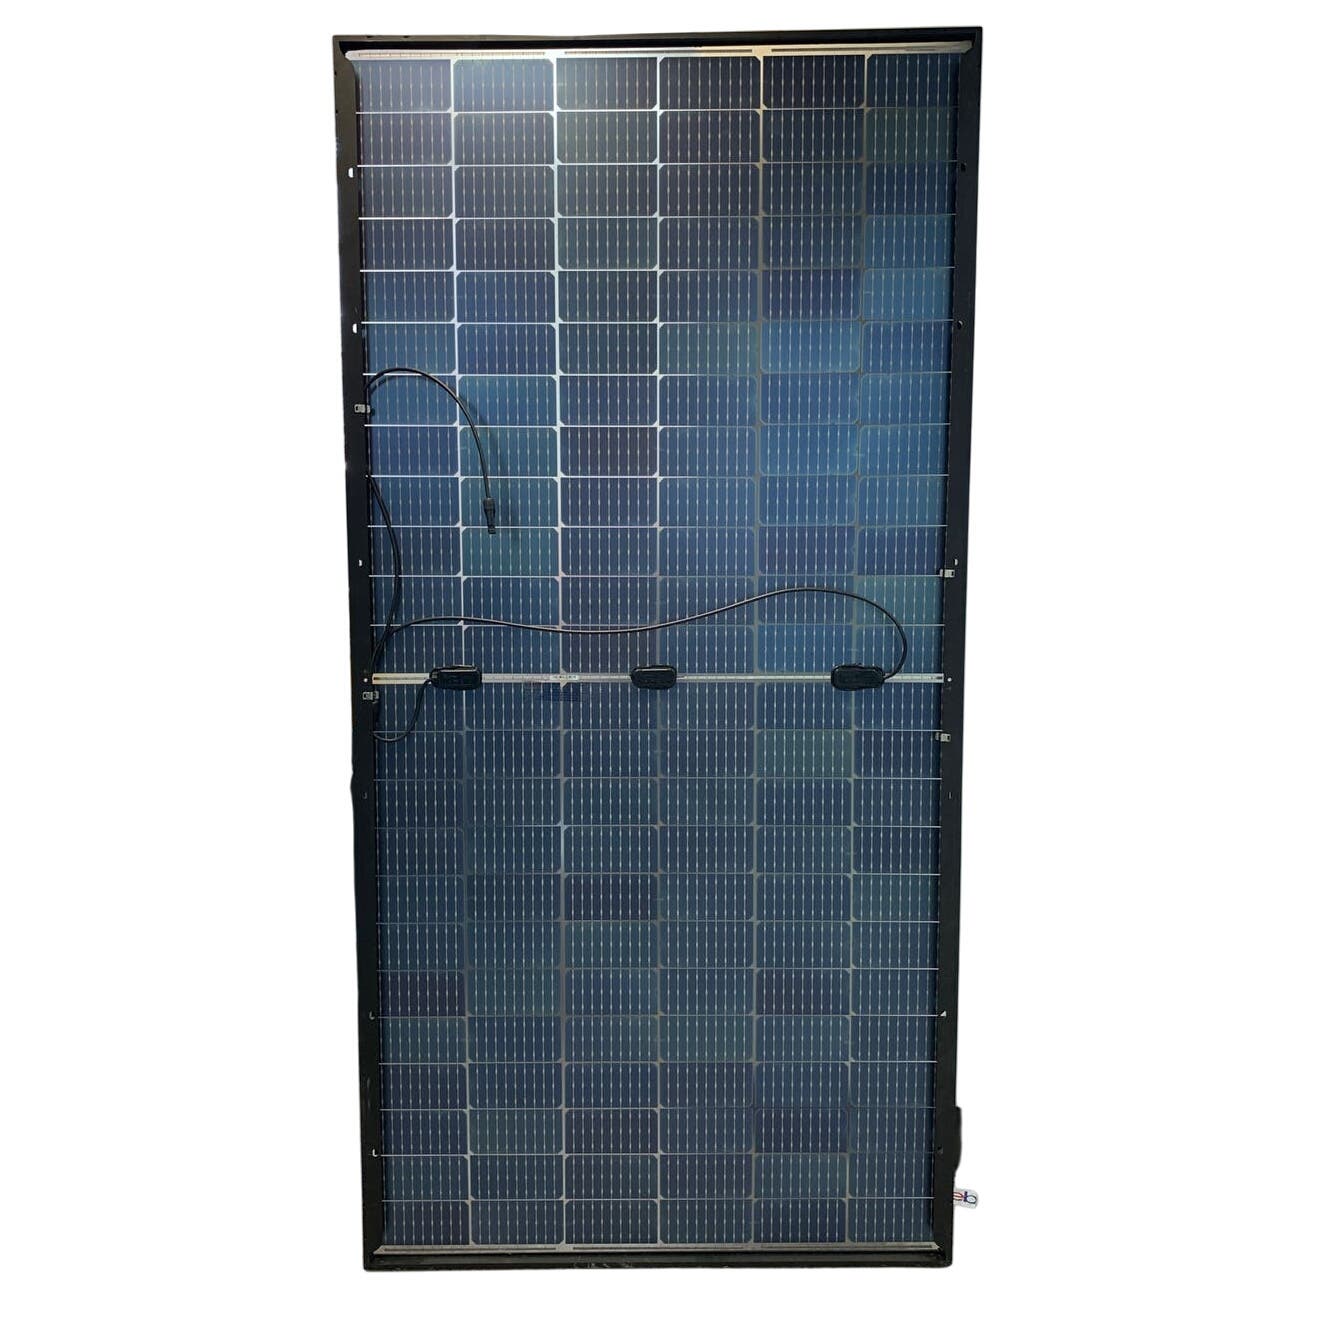 New VSun 445-144BMH 445W Ultra Black Double Glass Solar Panel Module